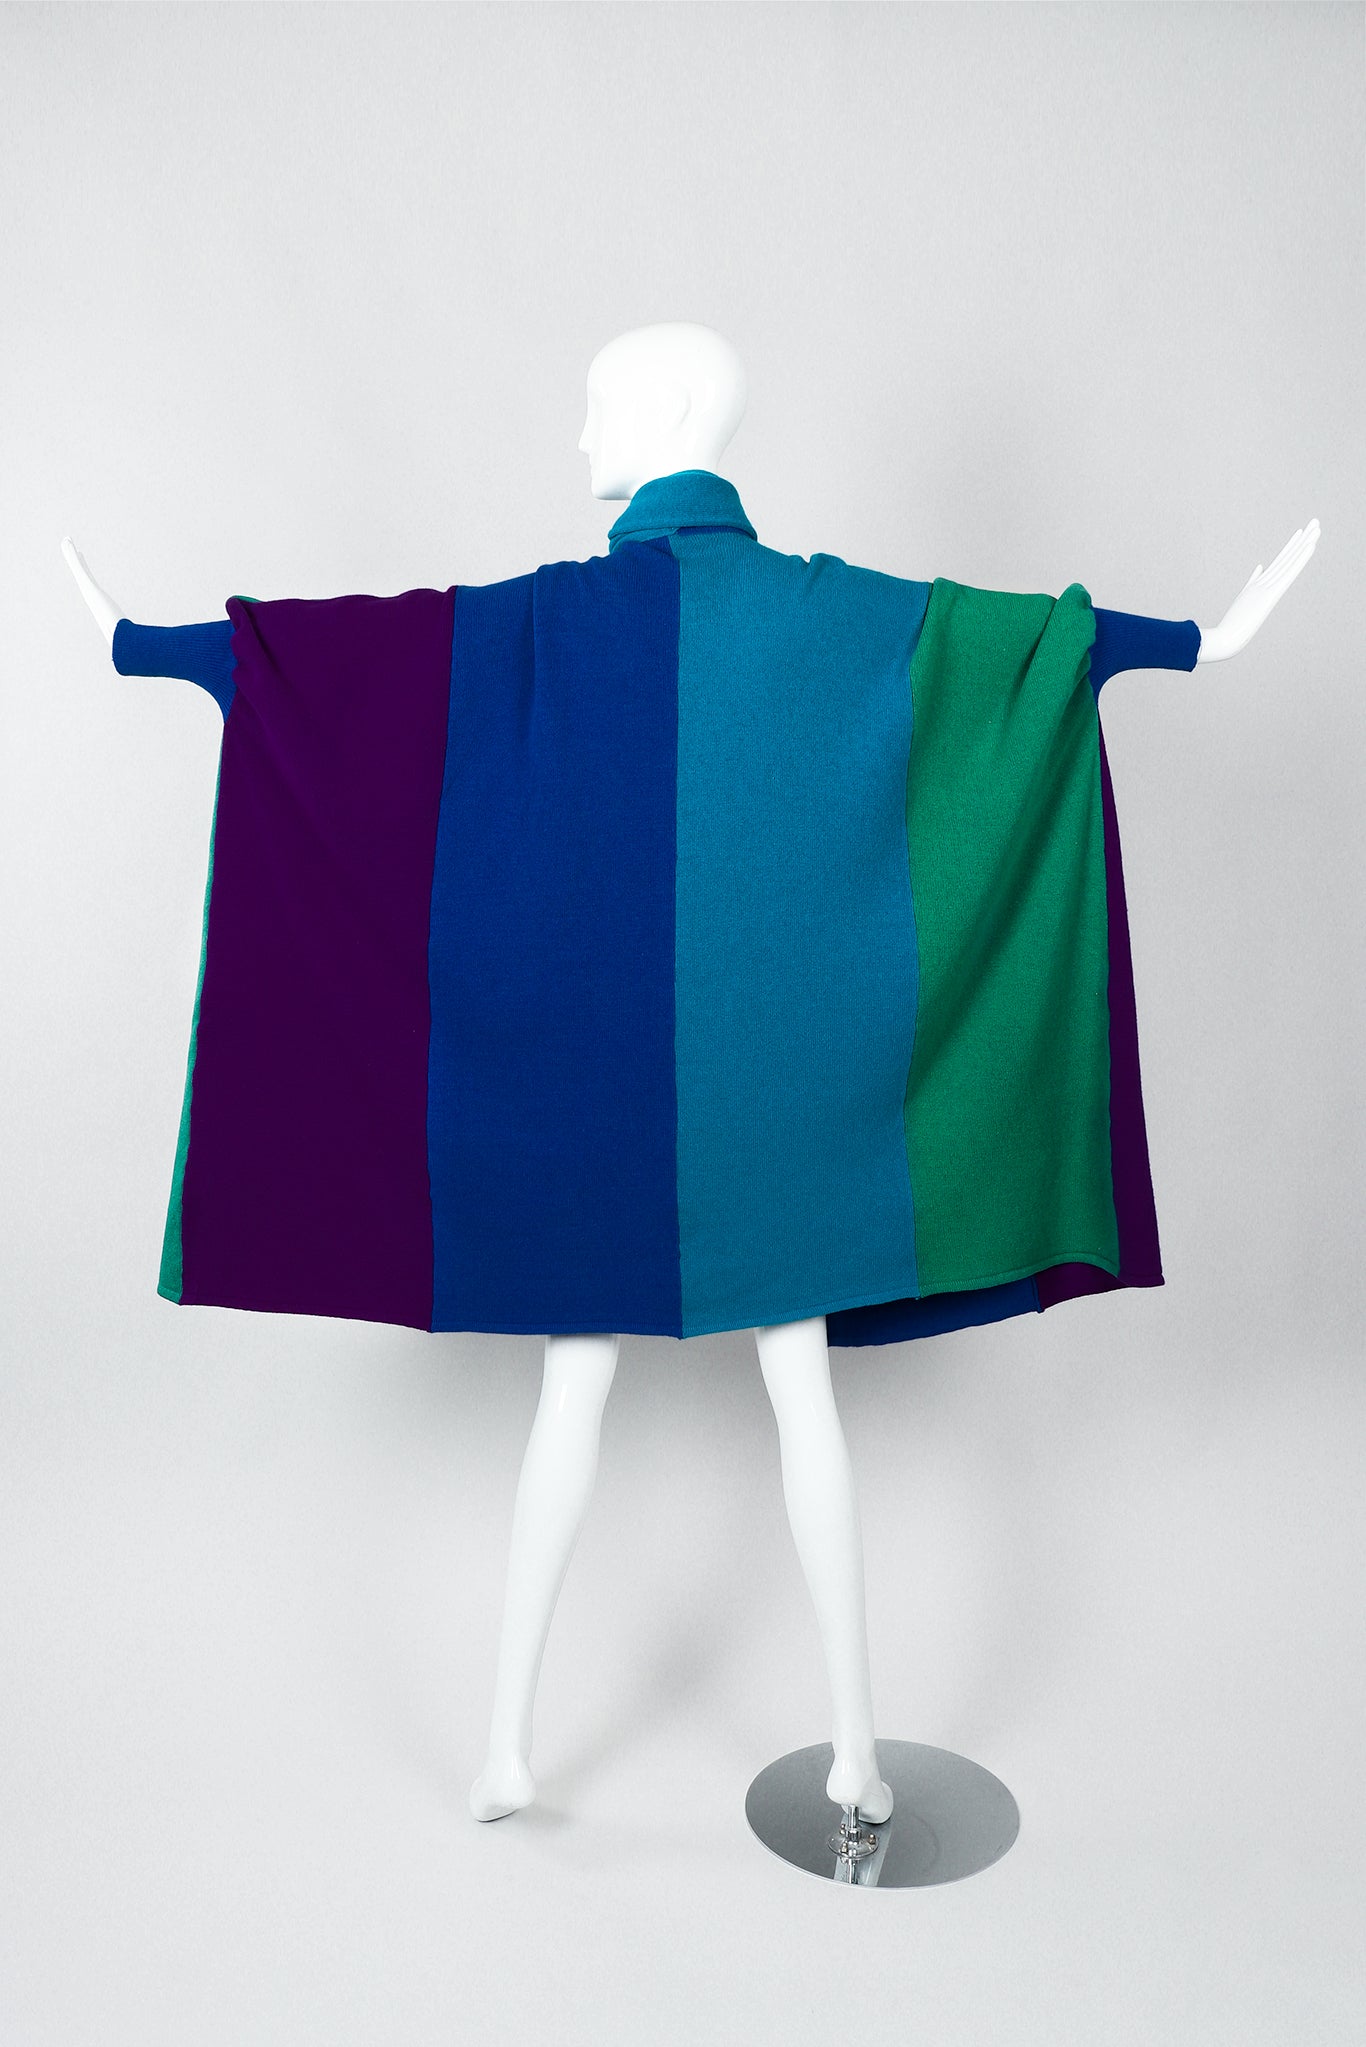 Vintage Elizabeth Arden The Salon Colorblock Batwing Knit Cape Coat on Mannequin back at Recess